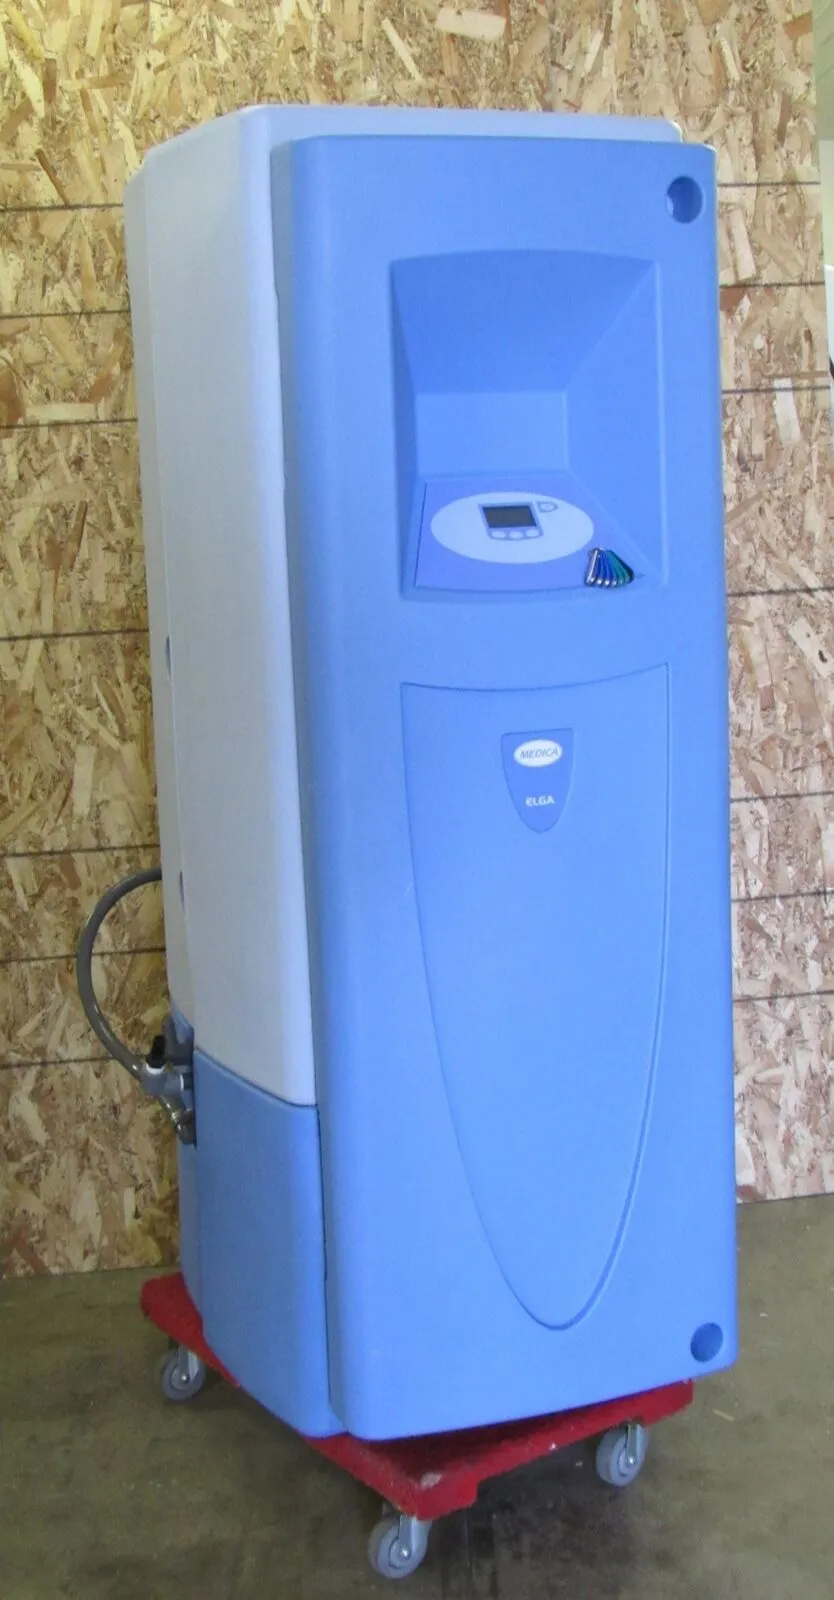 ELGA MEDICA R200 WATER PURIFICATION SYSTEM